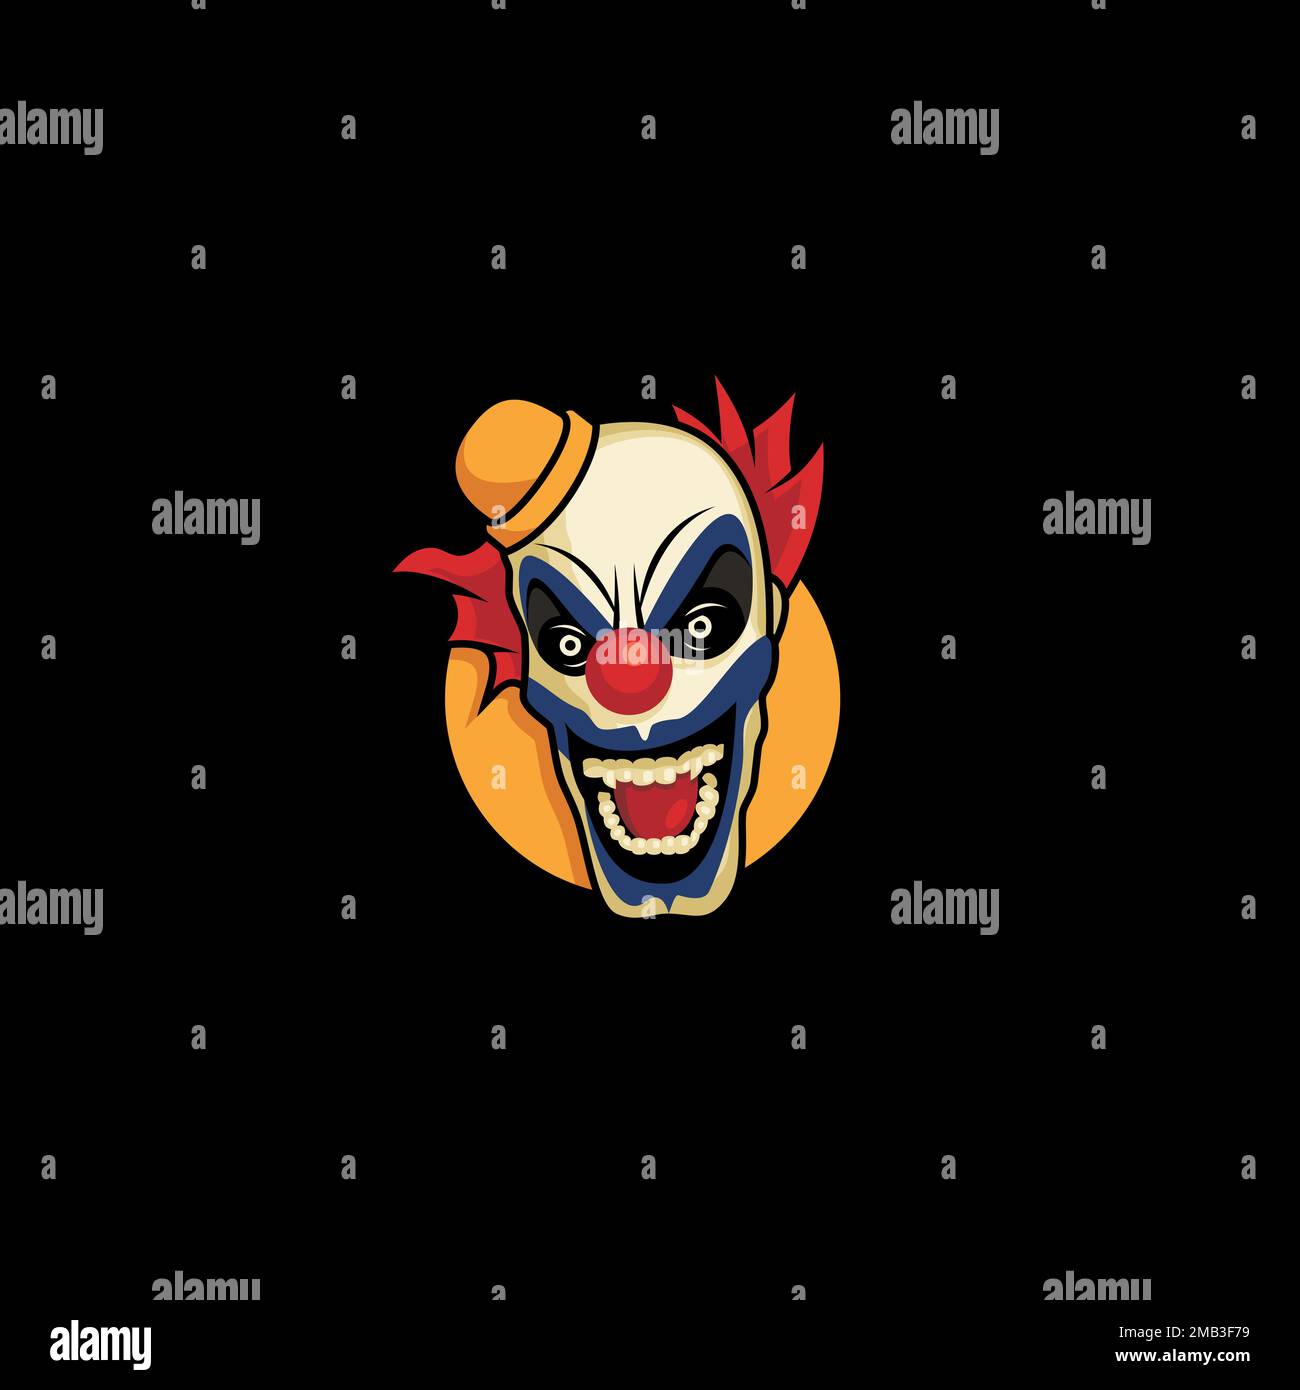 Creepy Clown logo or character design Stock Vector